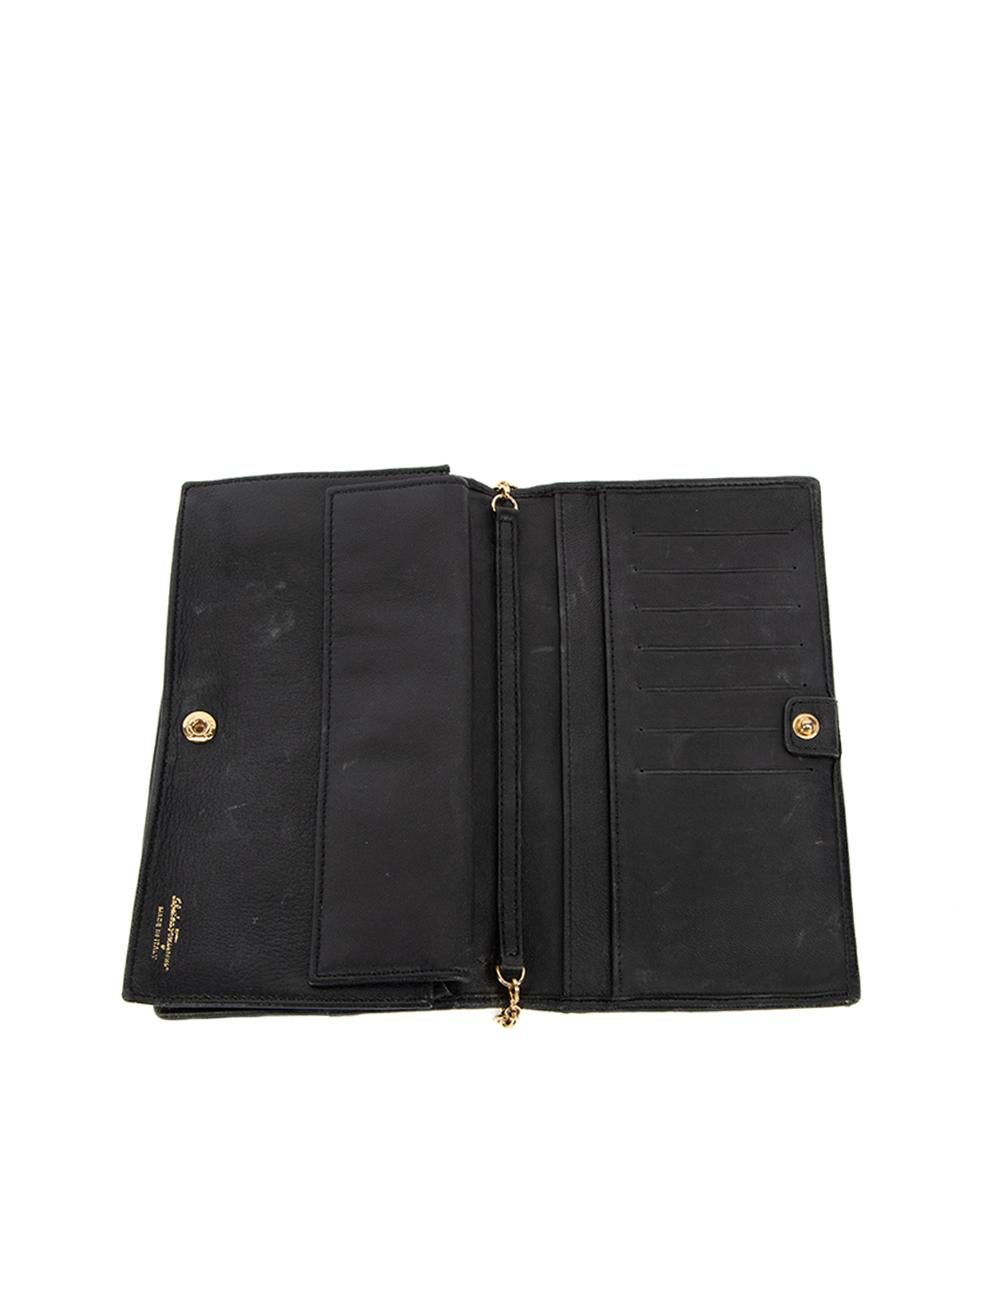 Salvatore Ferragamo Women's Black Leather Quilted Chain Wallet Bag 2